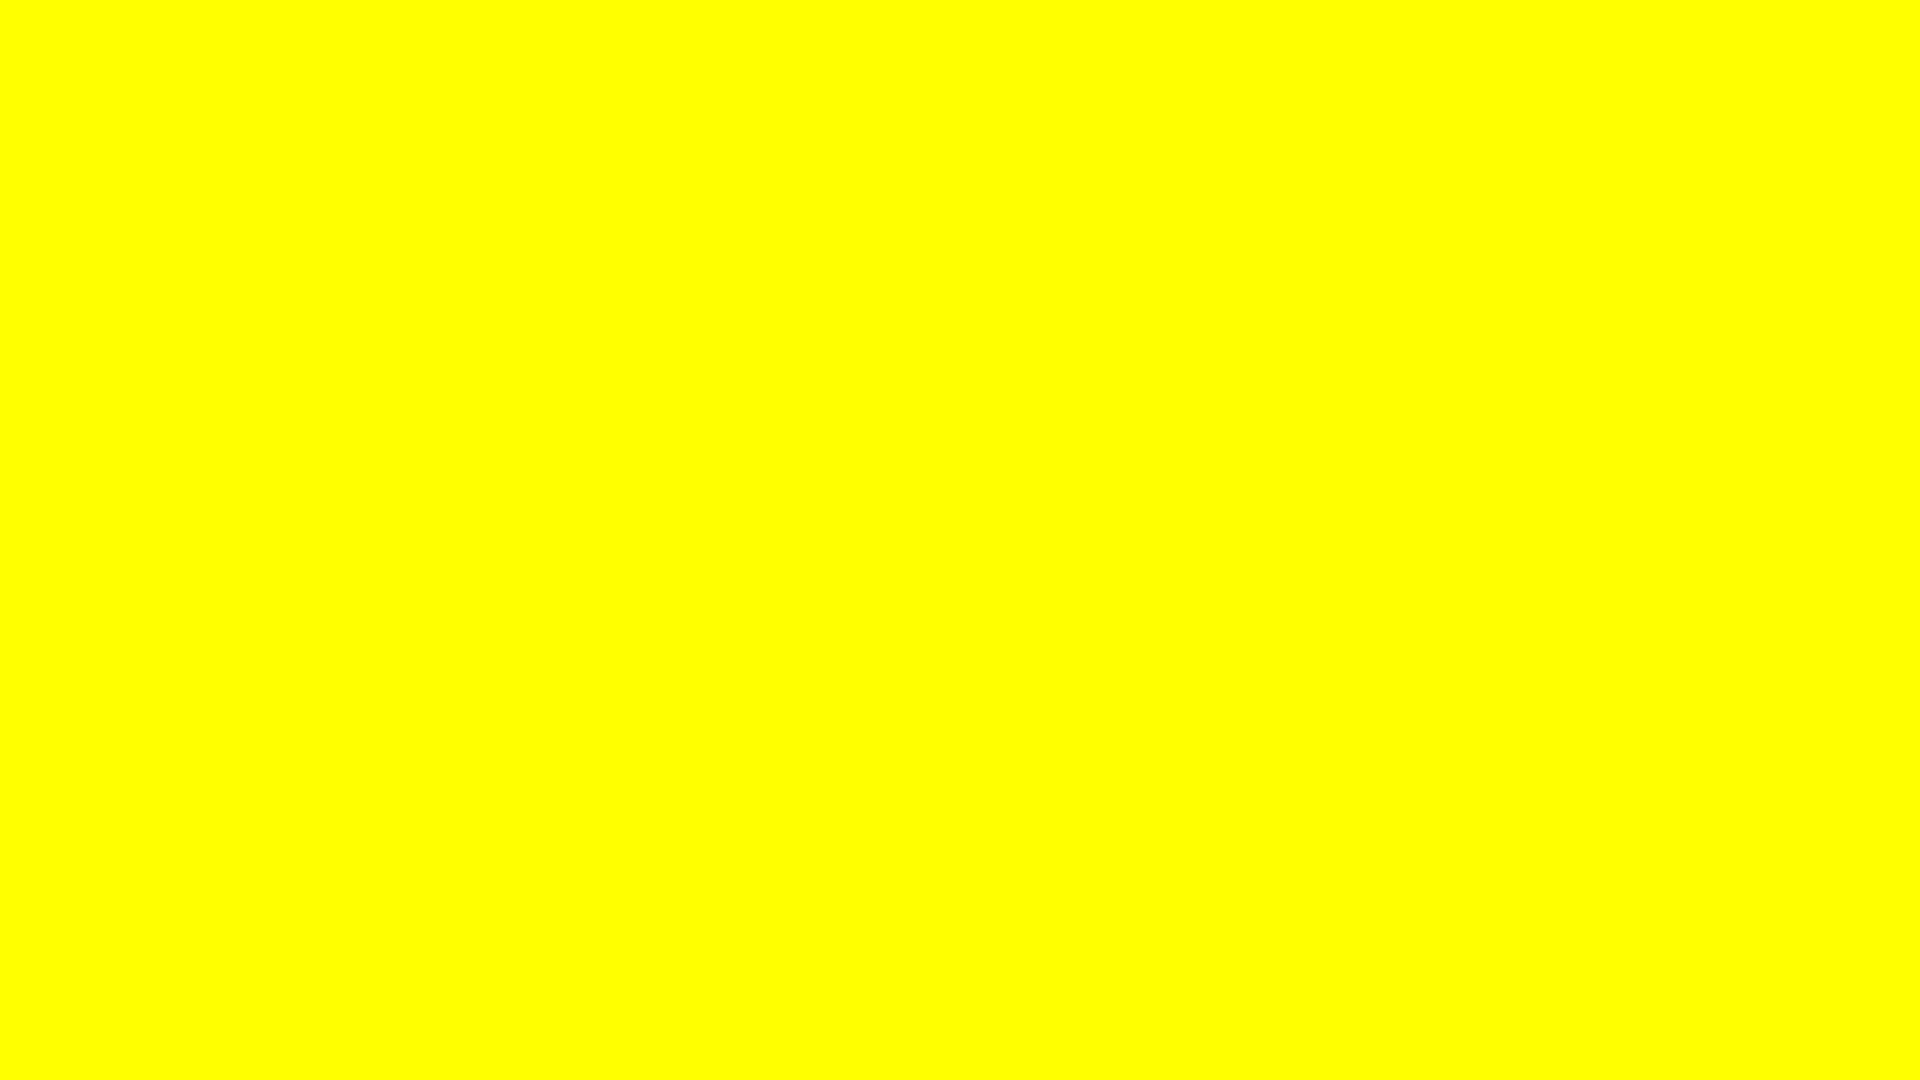 4 77 63. Рал желтый 1018. Рал 1016. Эггер цитрусовый желтый. Яркий желтый цвет.